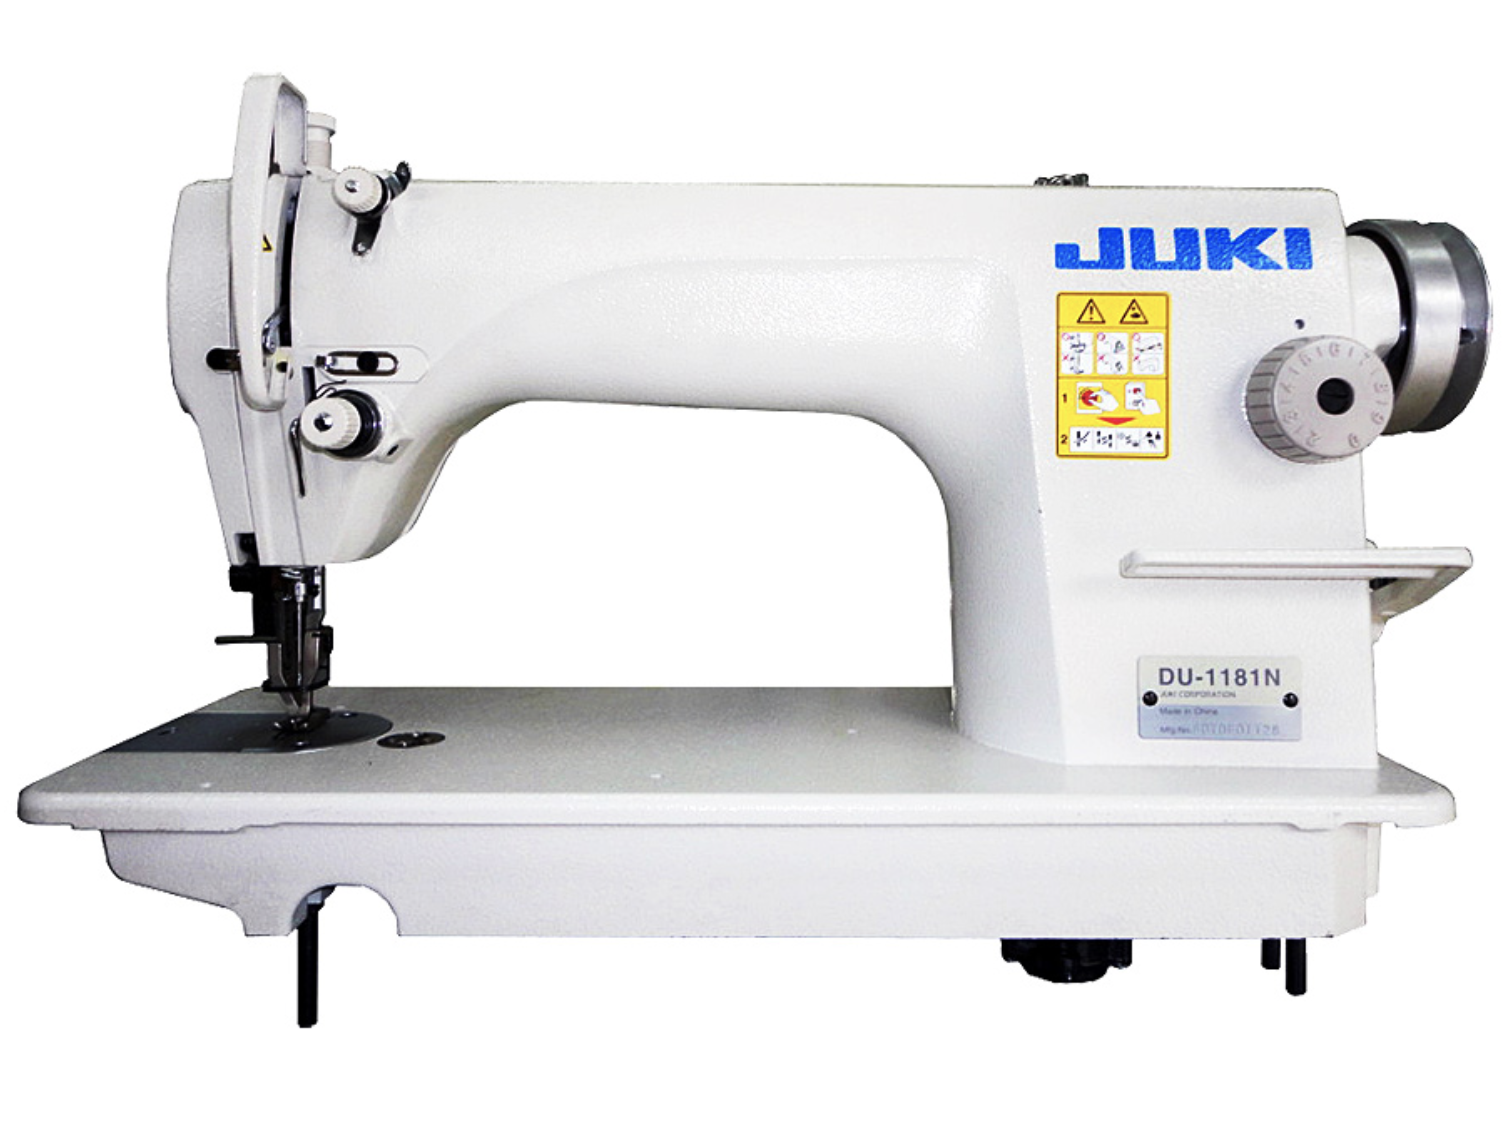 Should you buy an Industrial Machine? – SewingMachinesPlus.com Blog